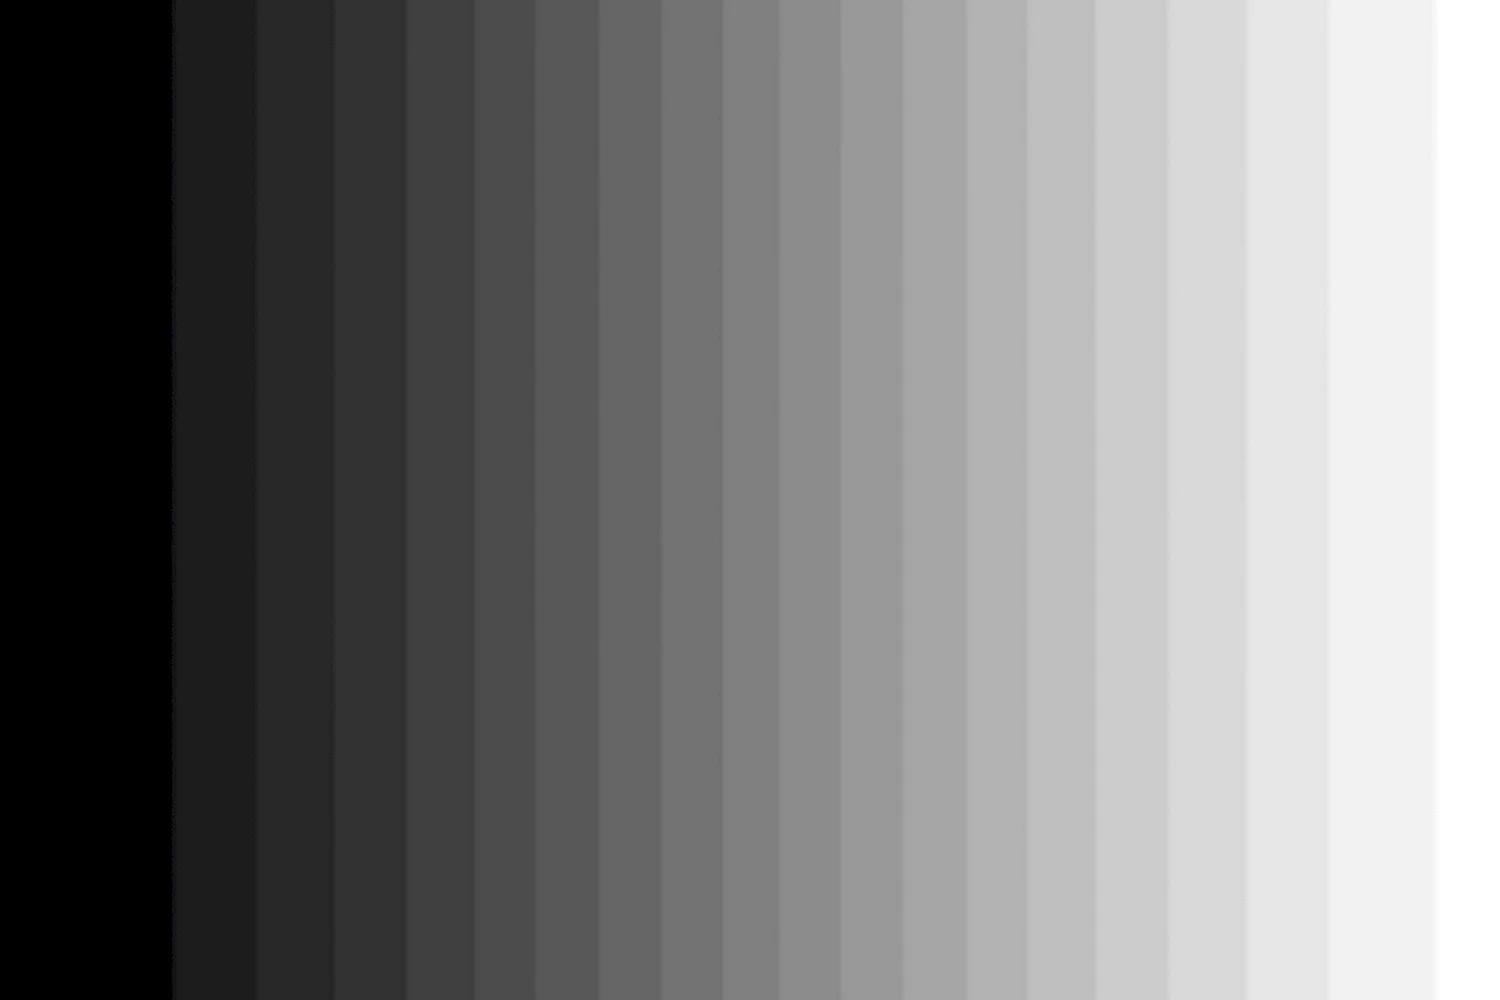 Grayscale /градации серого